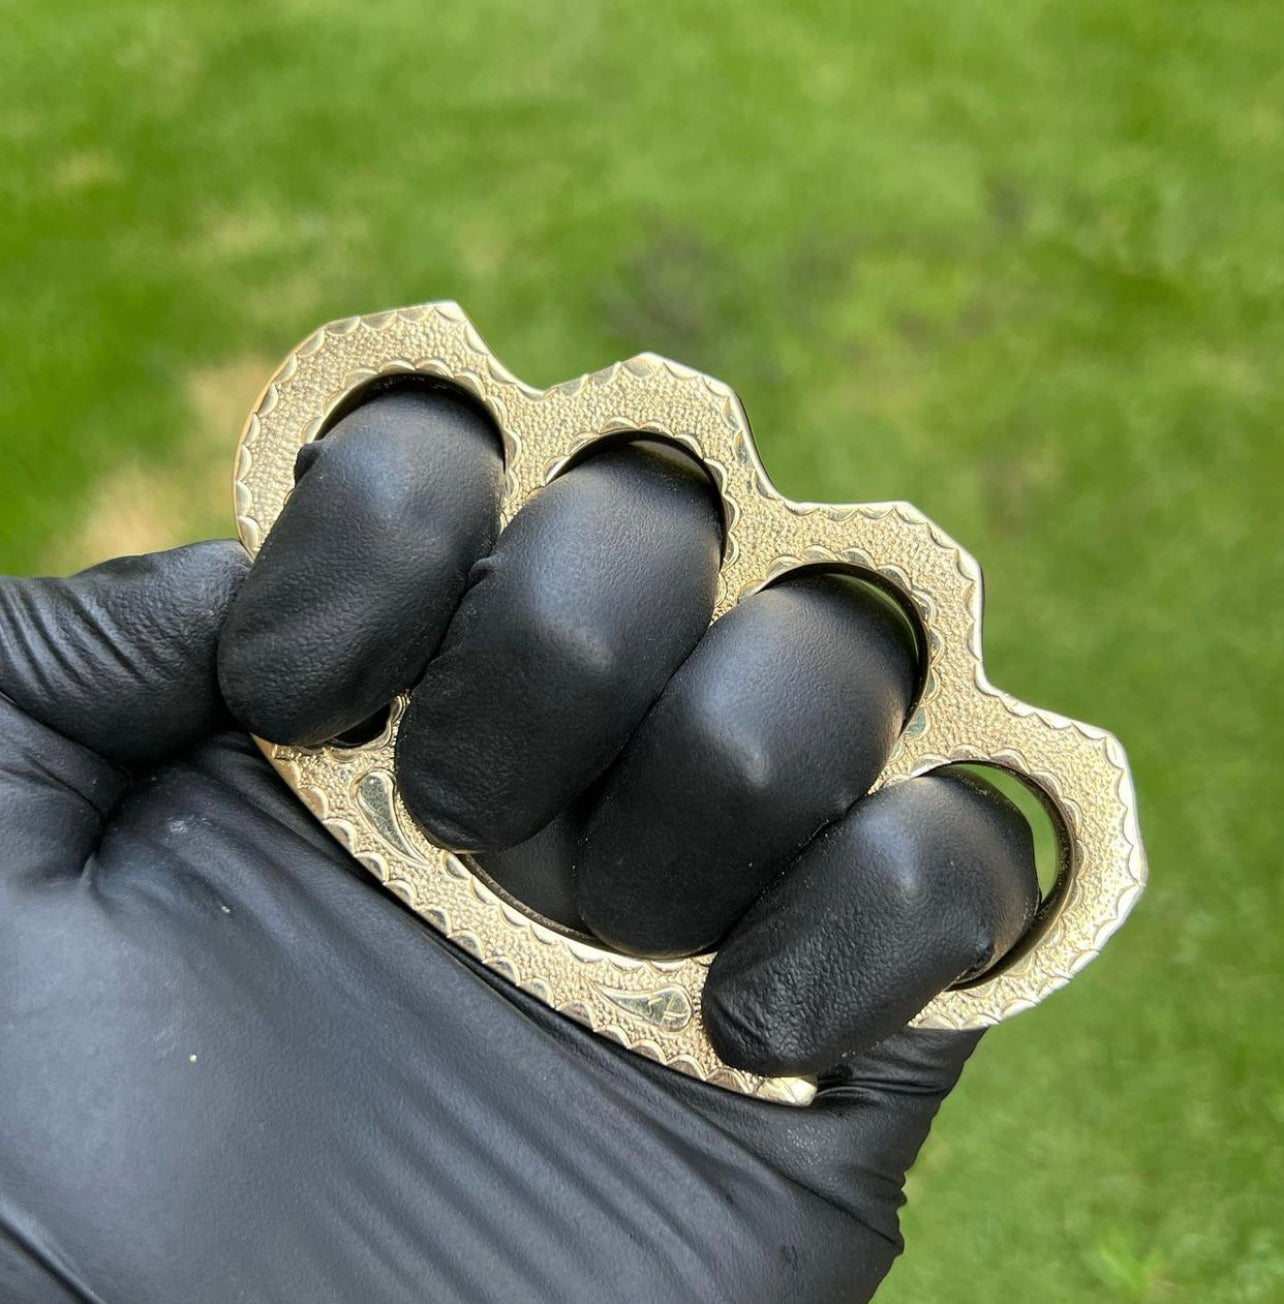 Handmade Engraved Brass knuckle